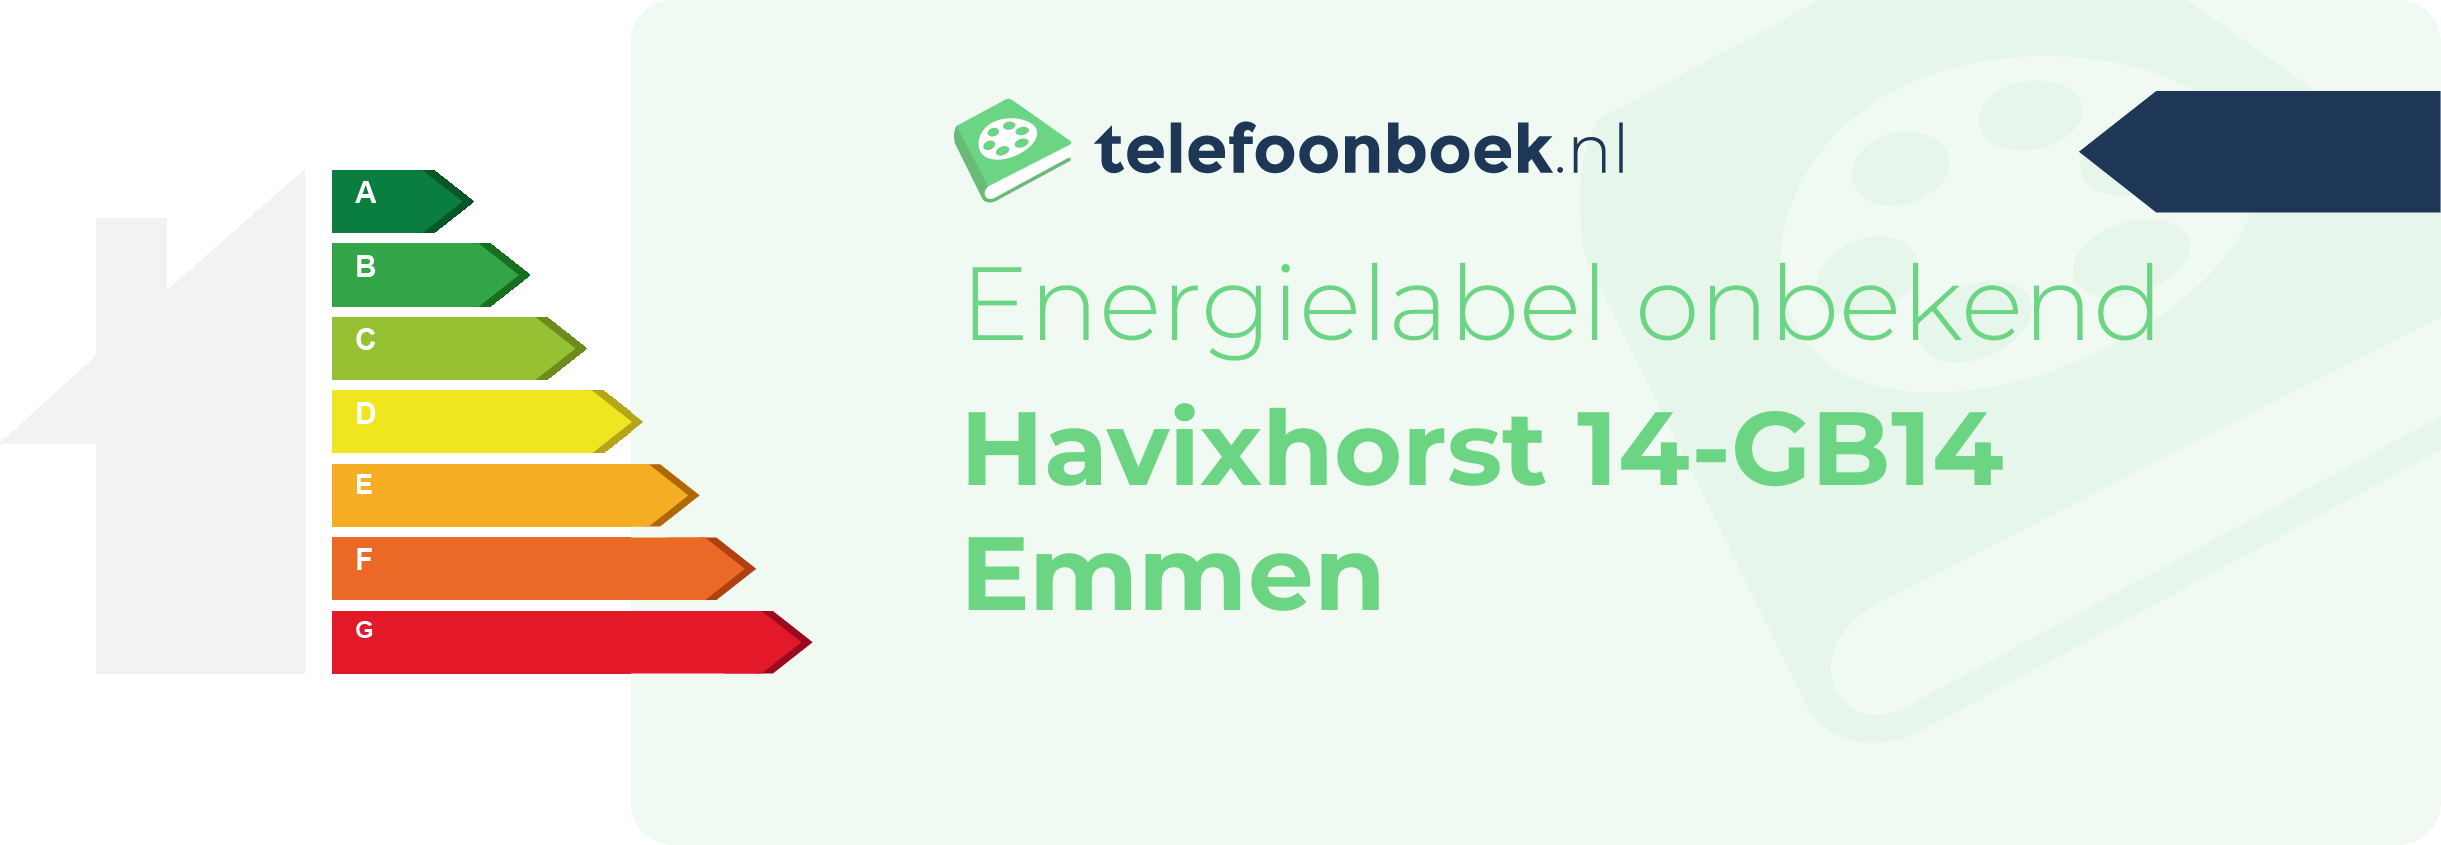 Energielabel Havixhorst 14-GB14 Emmen